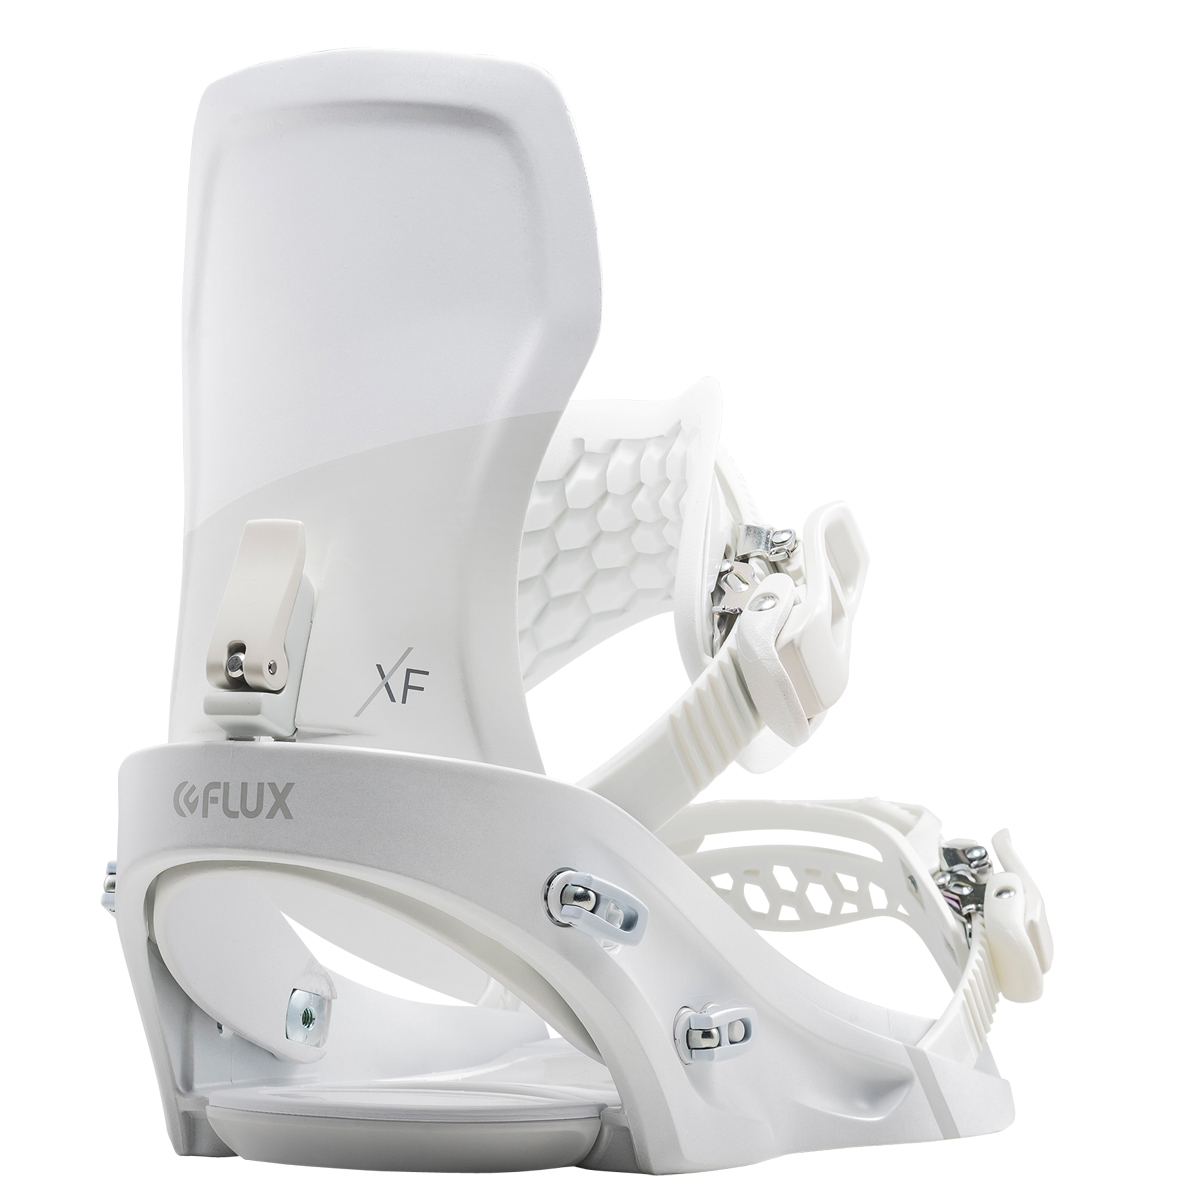 Flux XF Metallic White 2020 buy for 258 $ | Shop Board Club